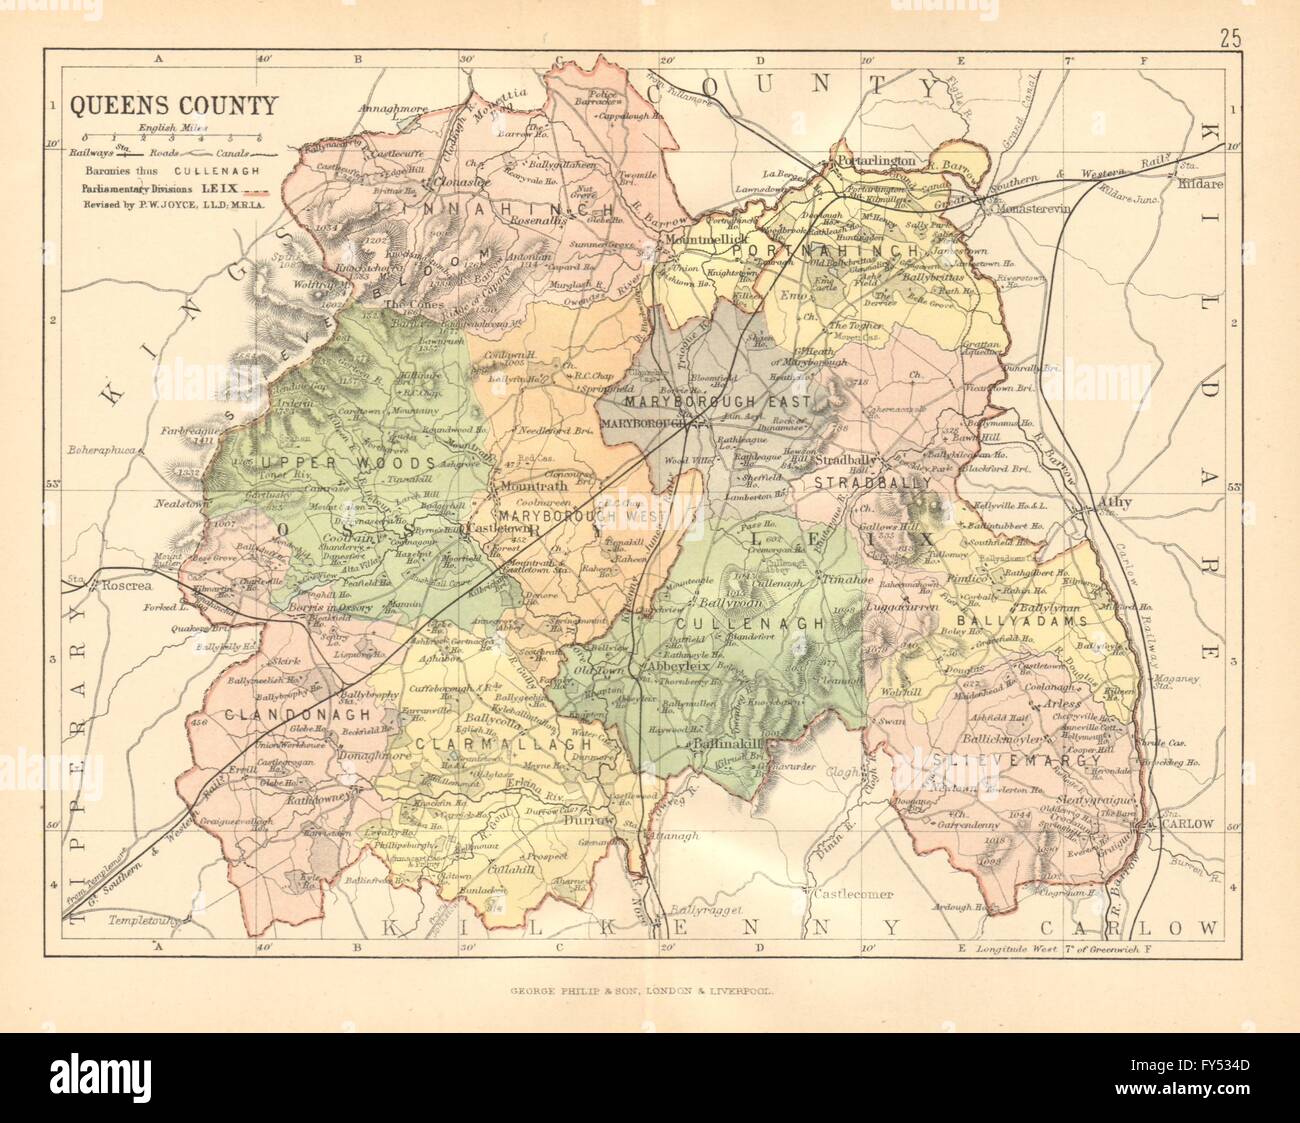 QUEENS COUNTY (LAOIS). Antike Landkarte county. Leinster. Irland.  Bartholomäus c1902 Stockfotografie - Alamy